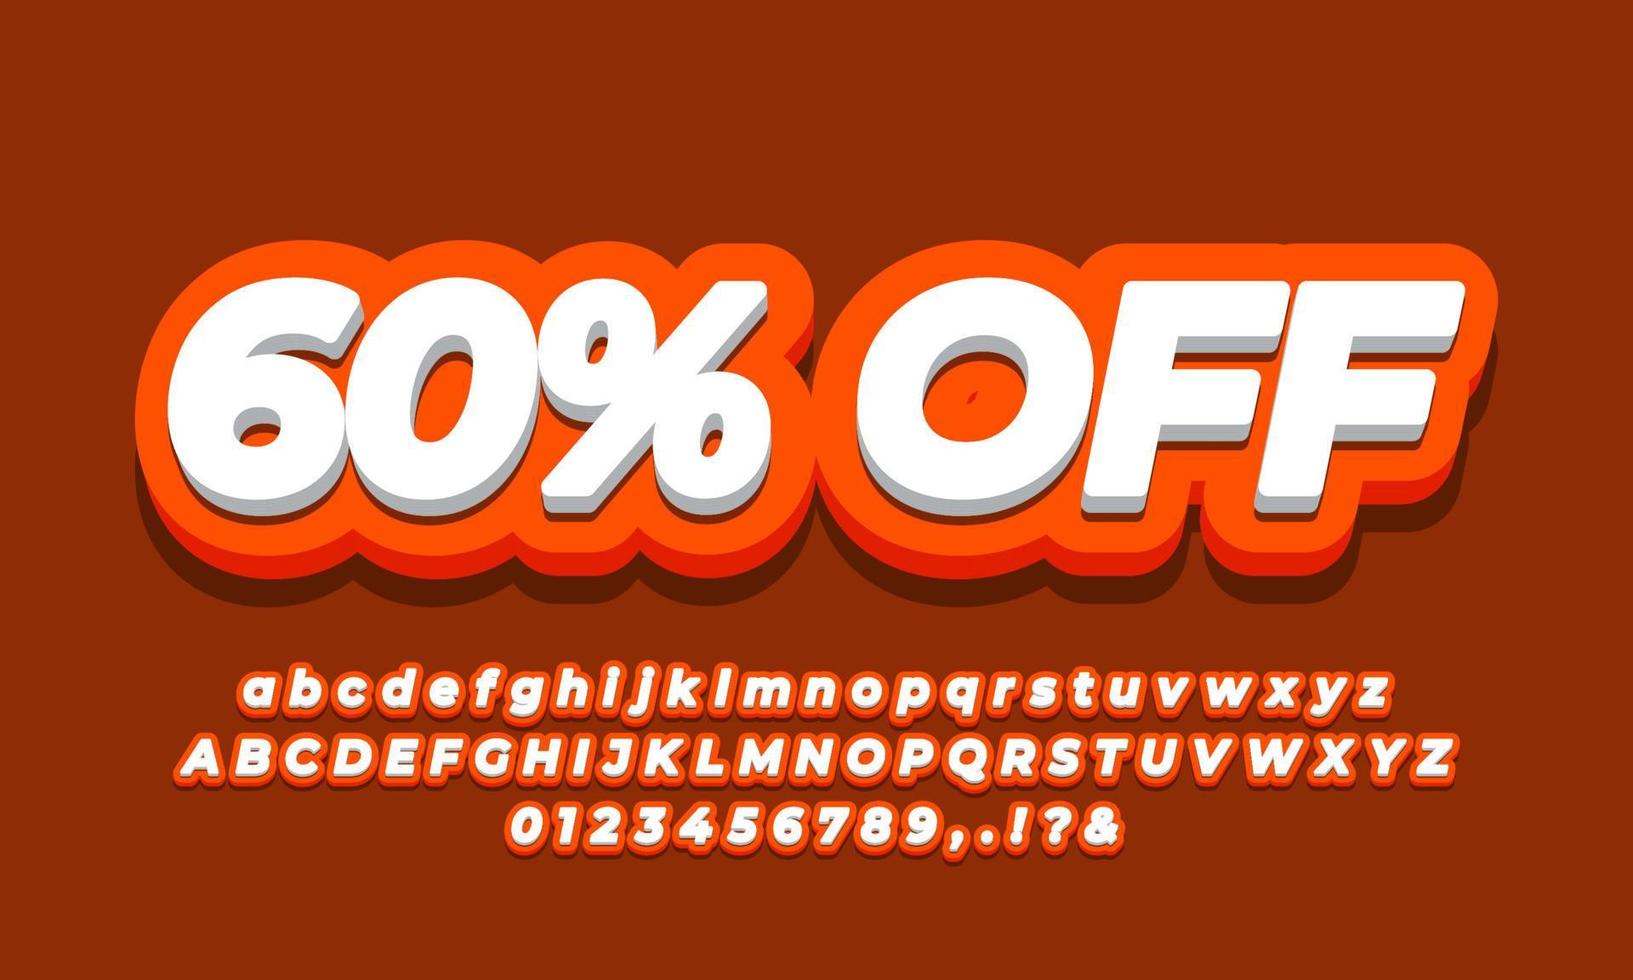 60 percent off sale discount promotion  3d  orange template vector